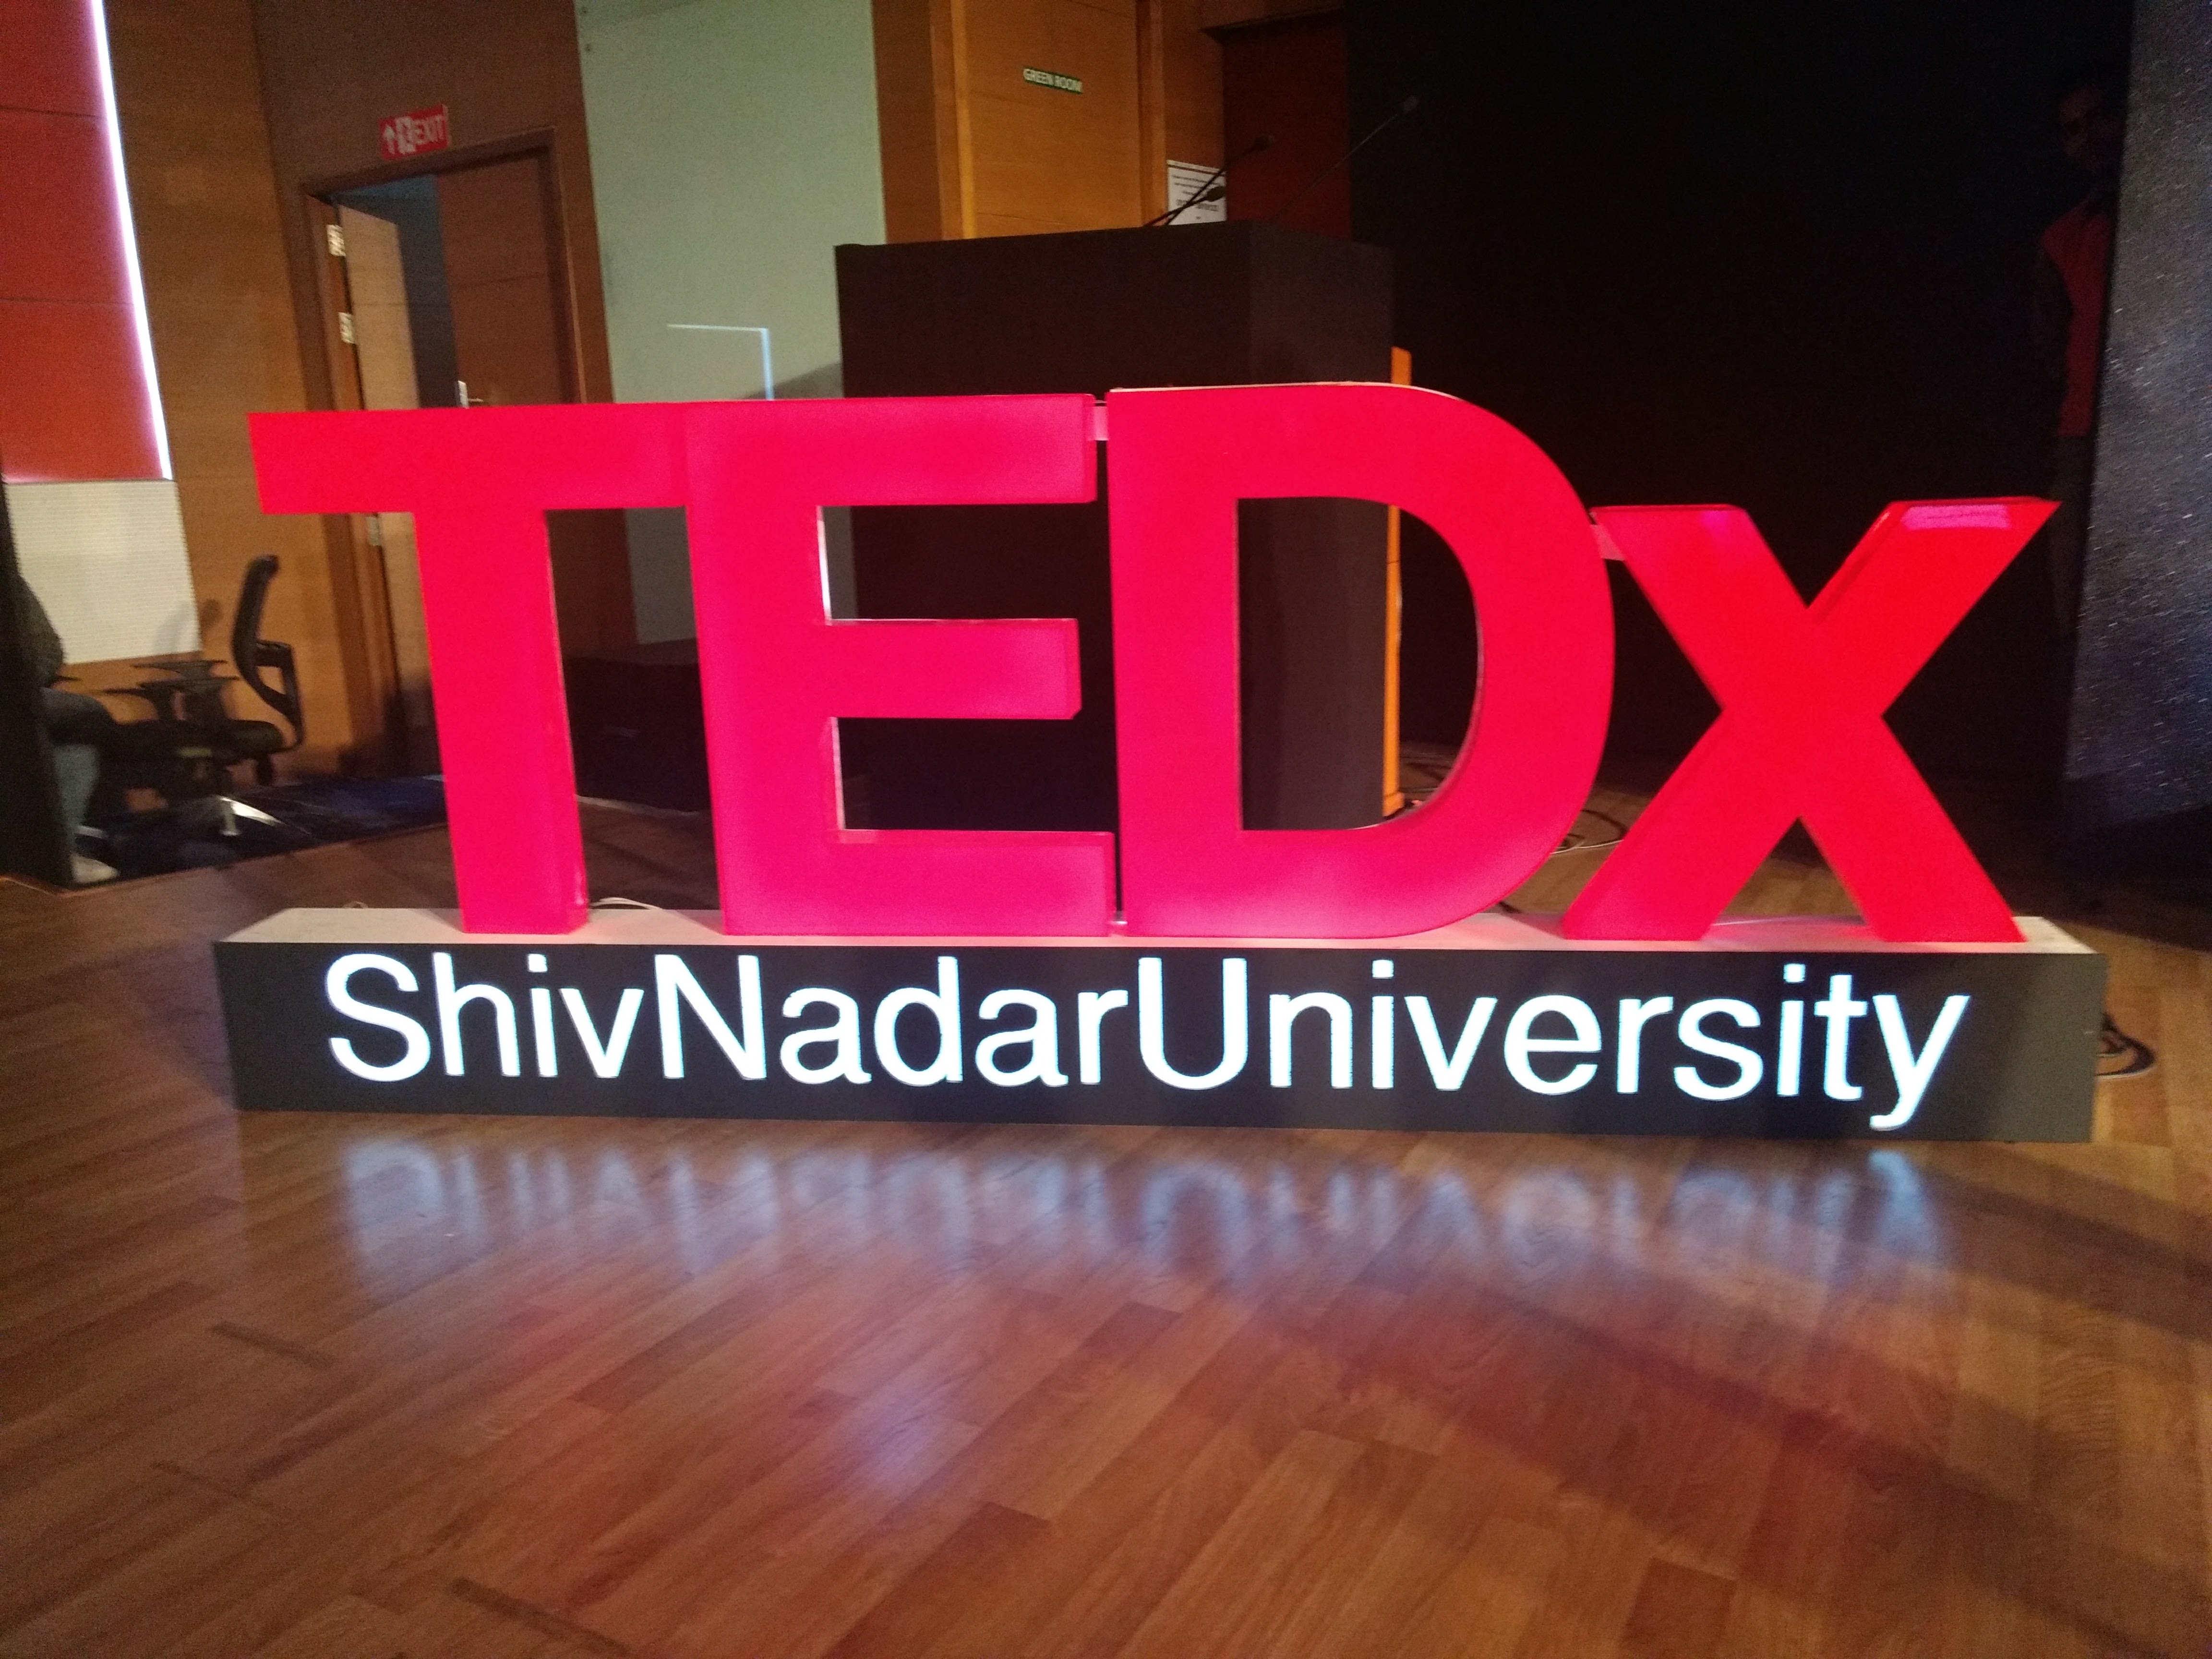 Getting Inspired at TEDx Shiv Nadar University